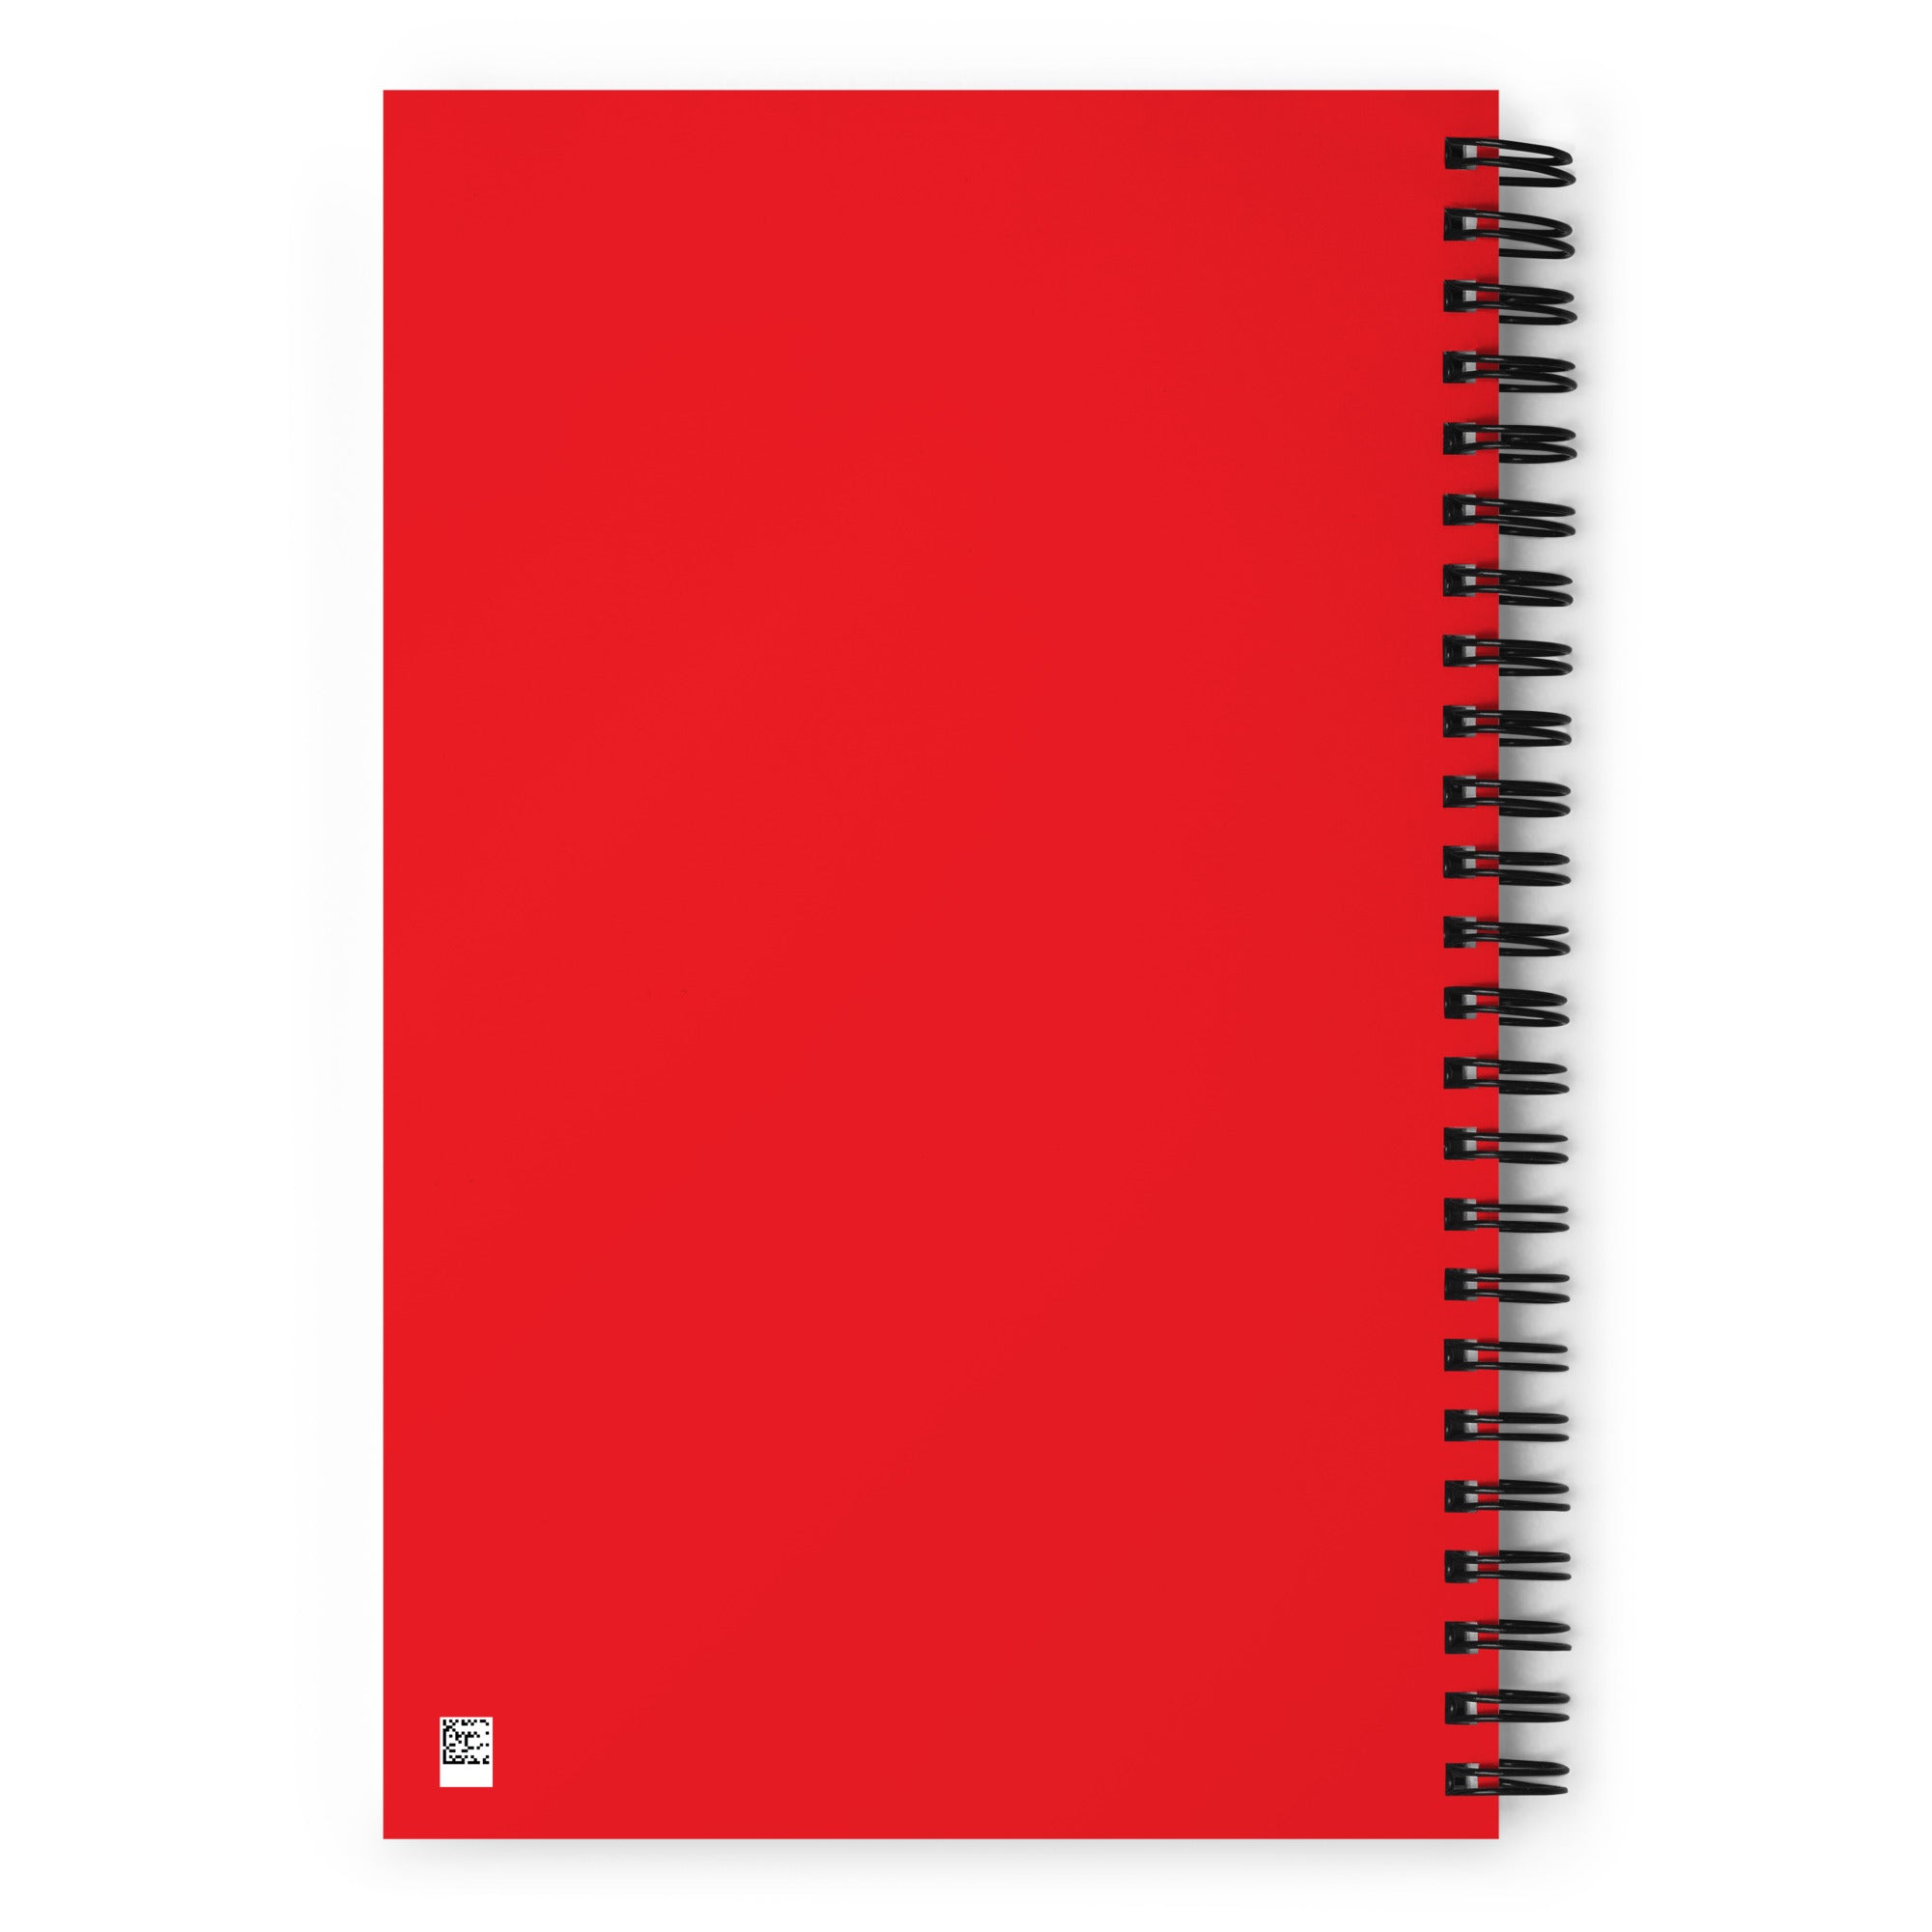 BW Spiral notebook